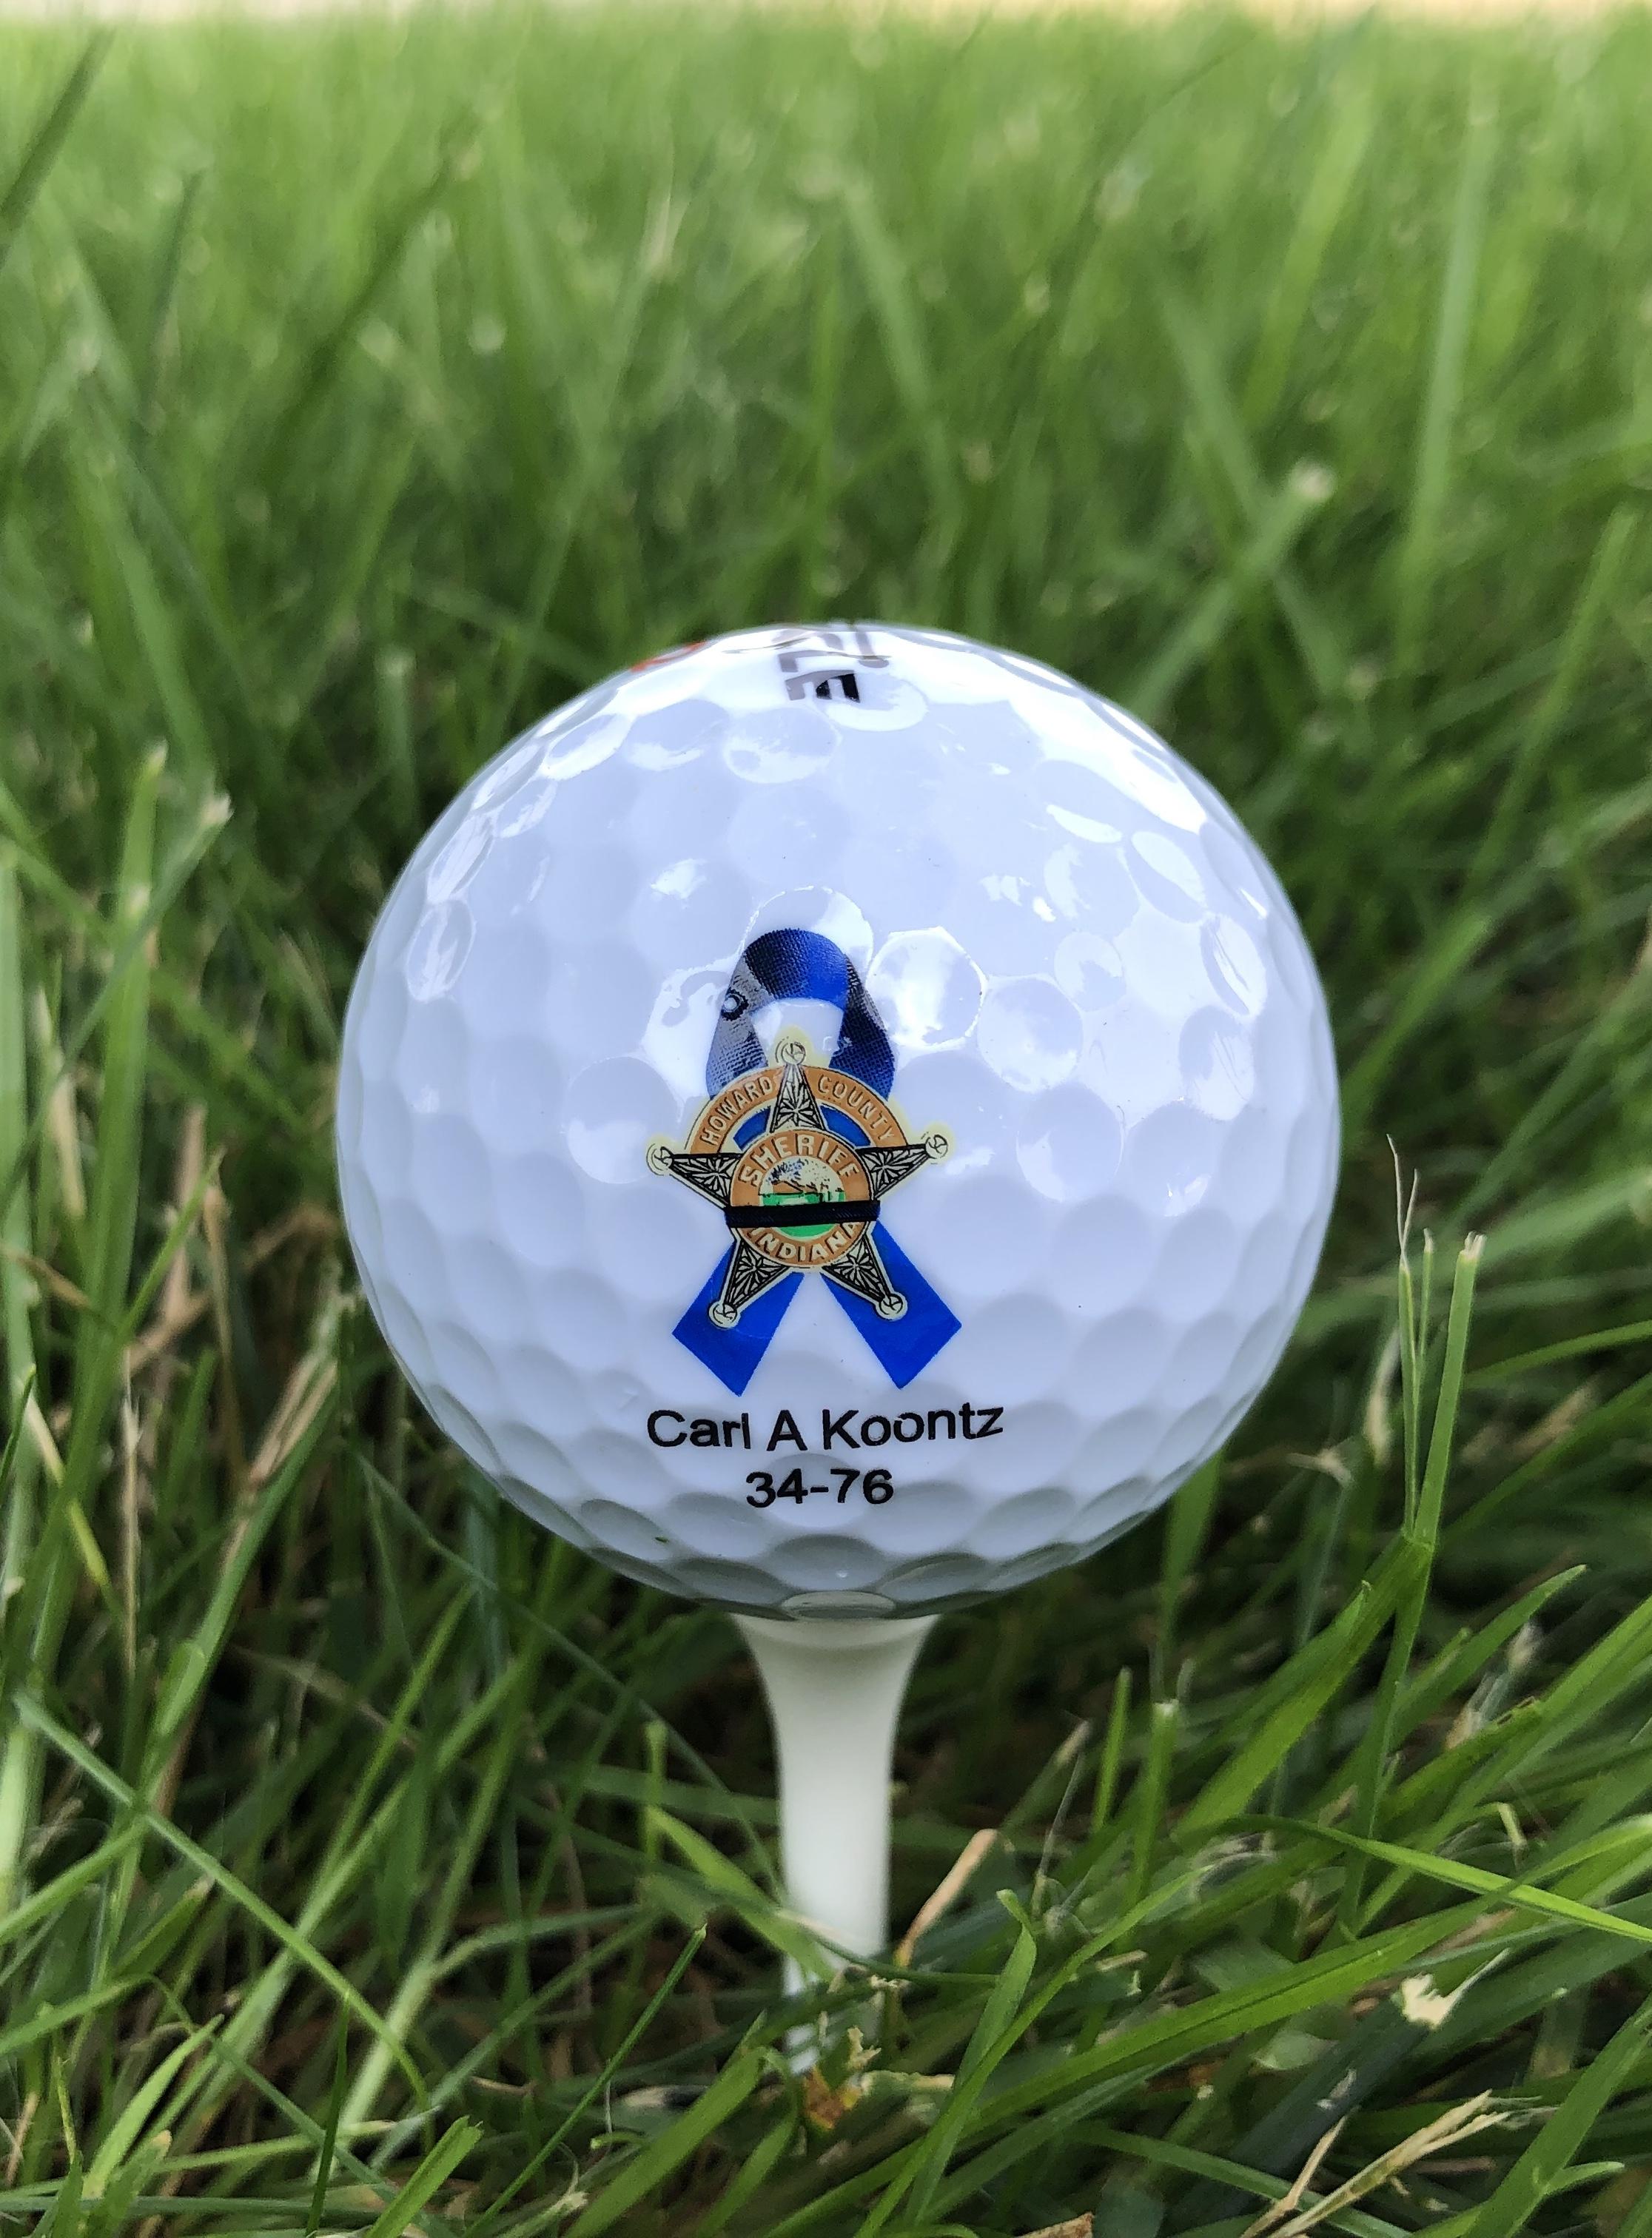 2019 Annual Deputy Koontz Memorial Golf Outing